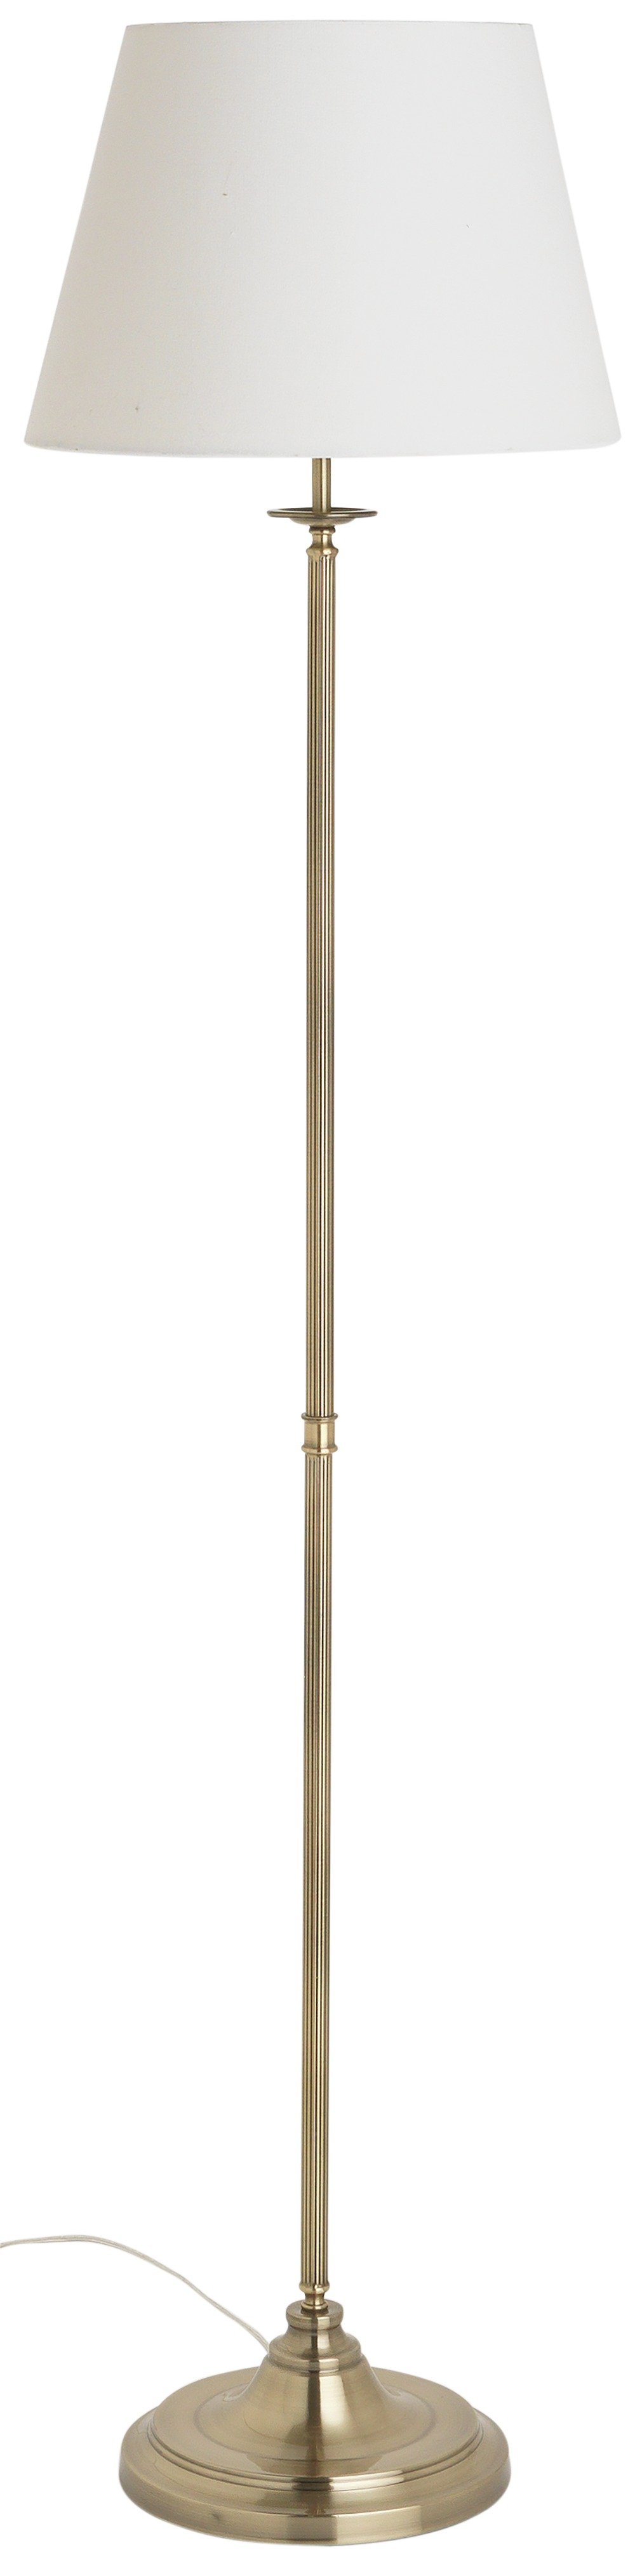 Argos Home Artisan Floor Lamp - Antique Brass (7077751) | Argos Price